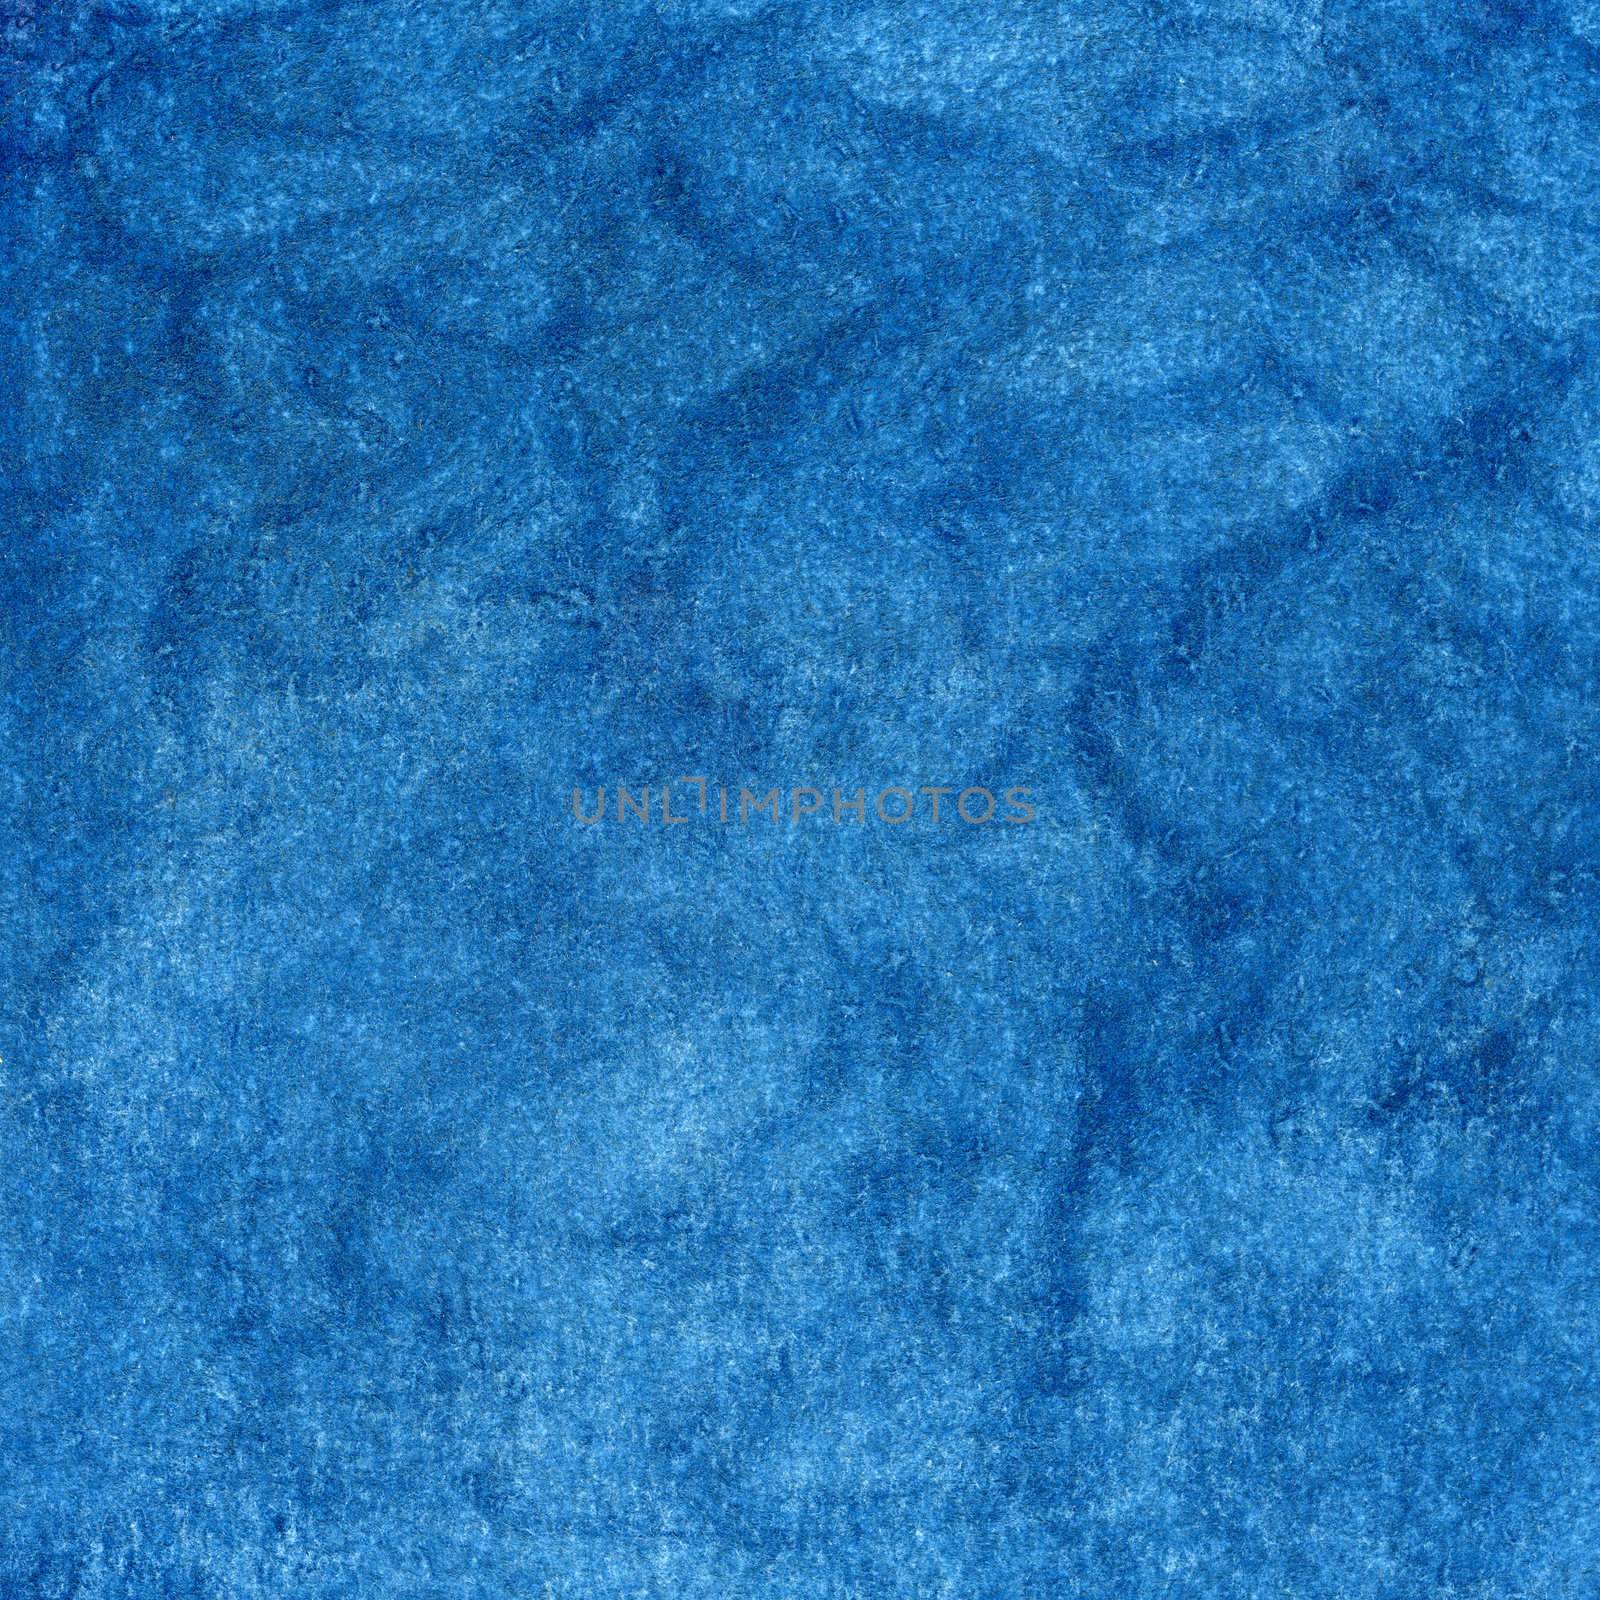 blue rough texture - watercolor background by PixelsAway